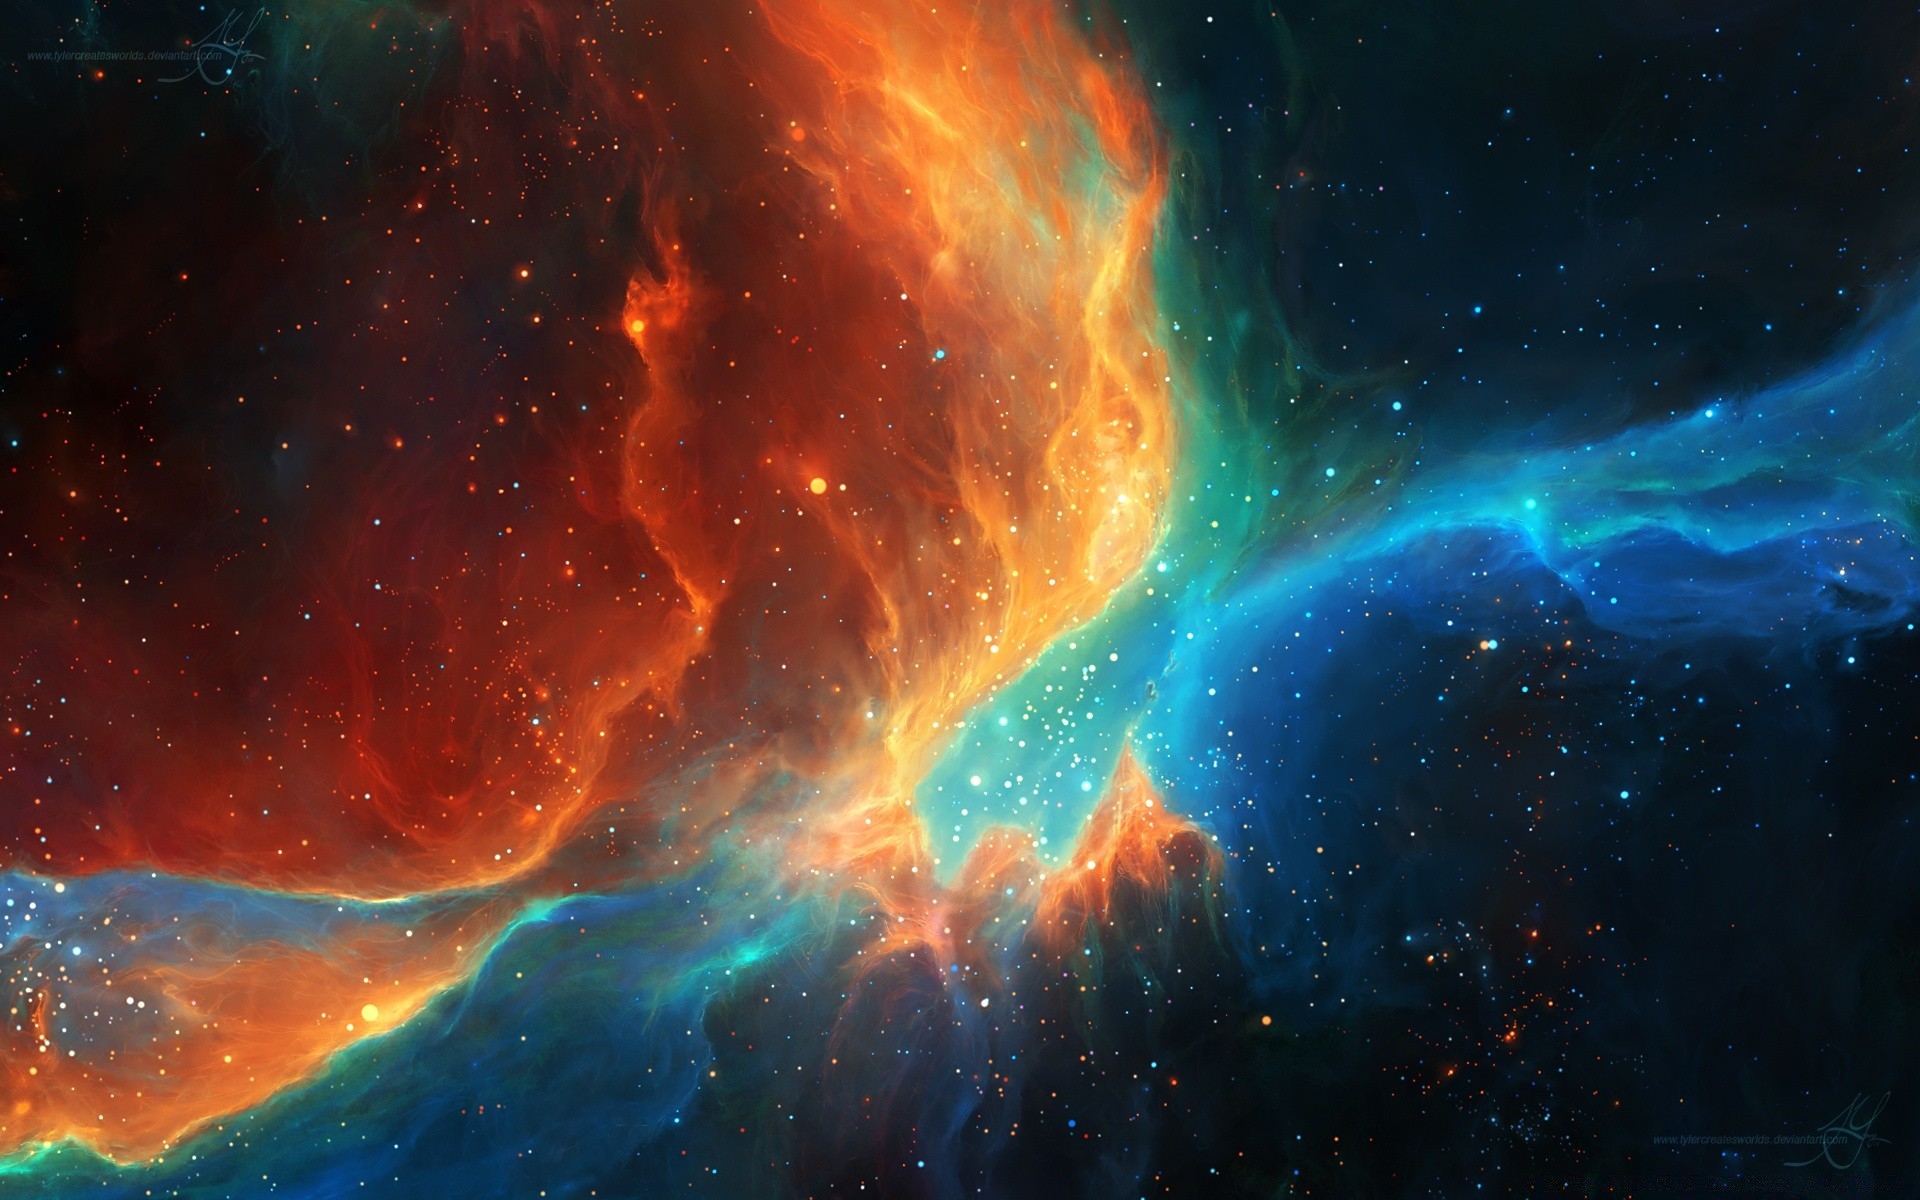 nebula astronomy galaxy surreal moon space fantasy planet science exploration ball-shaped plasma infinity cosmos constellation imagery heaven astrology supernova